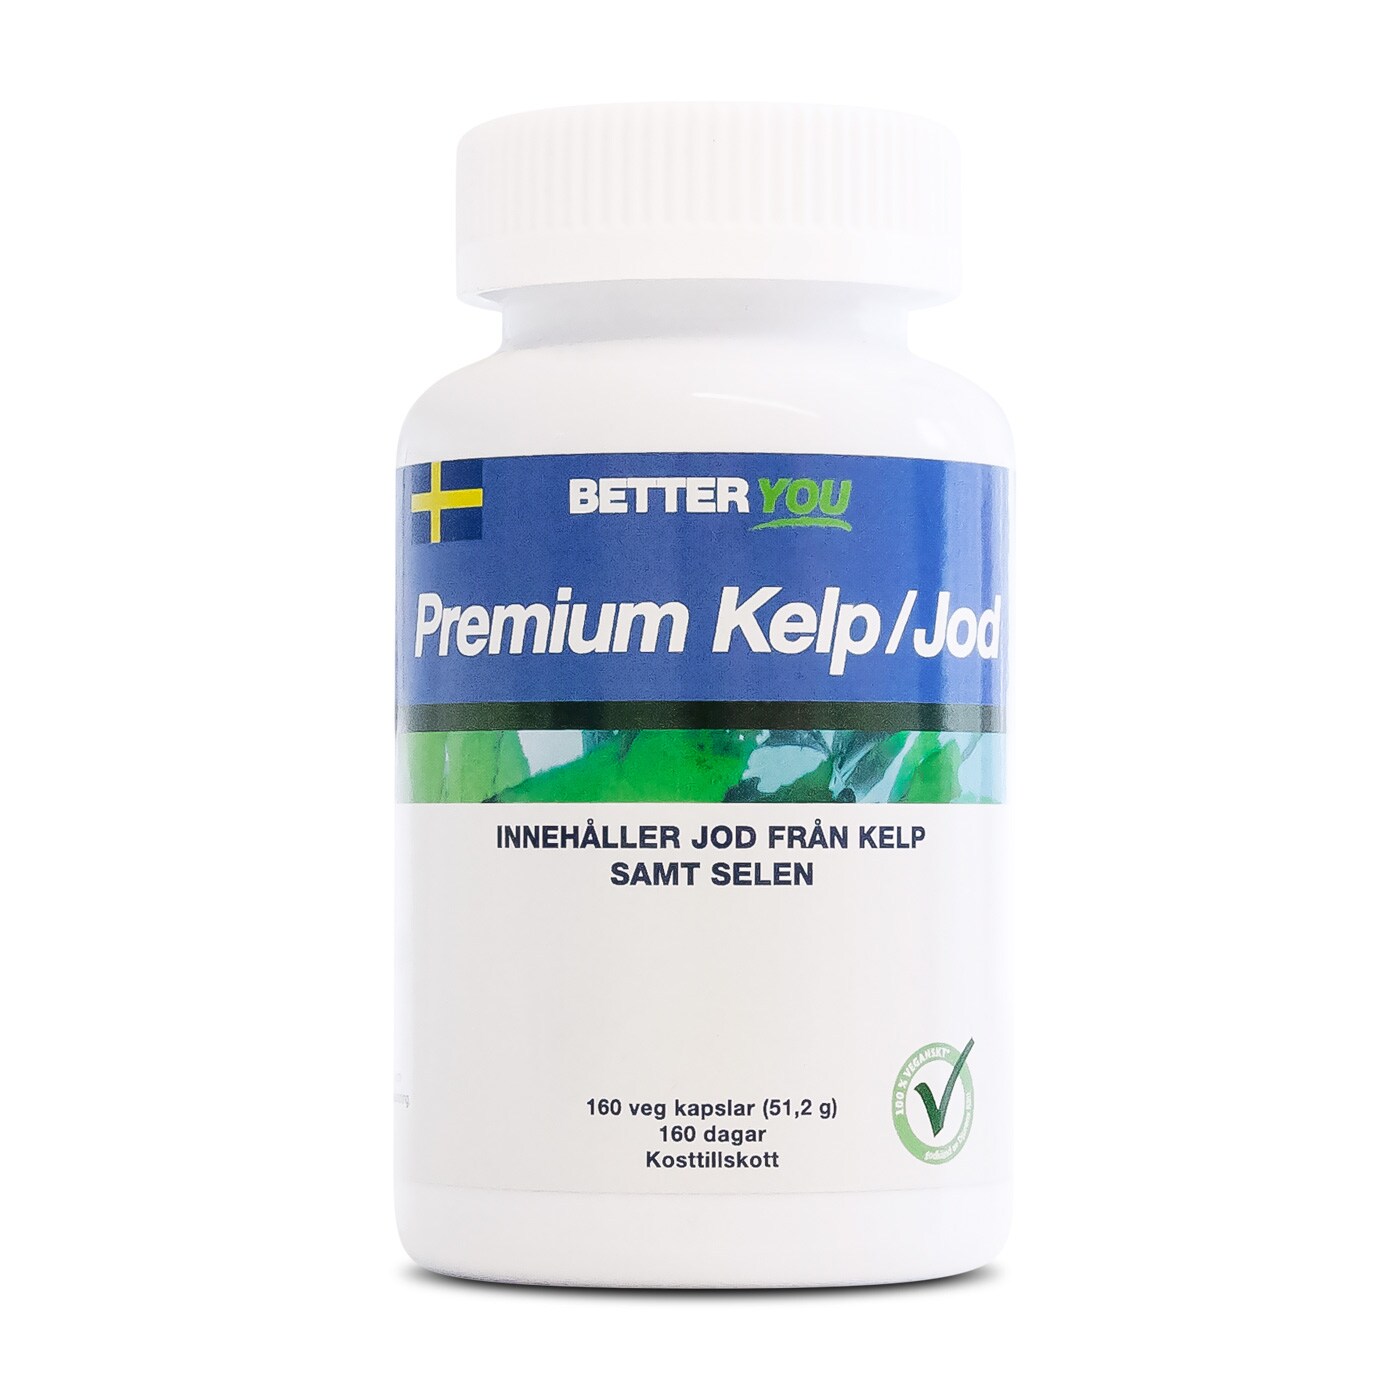 Premium Kelp/Jod